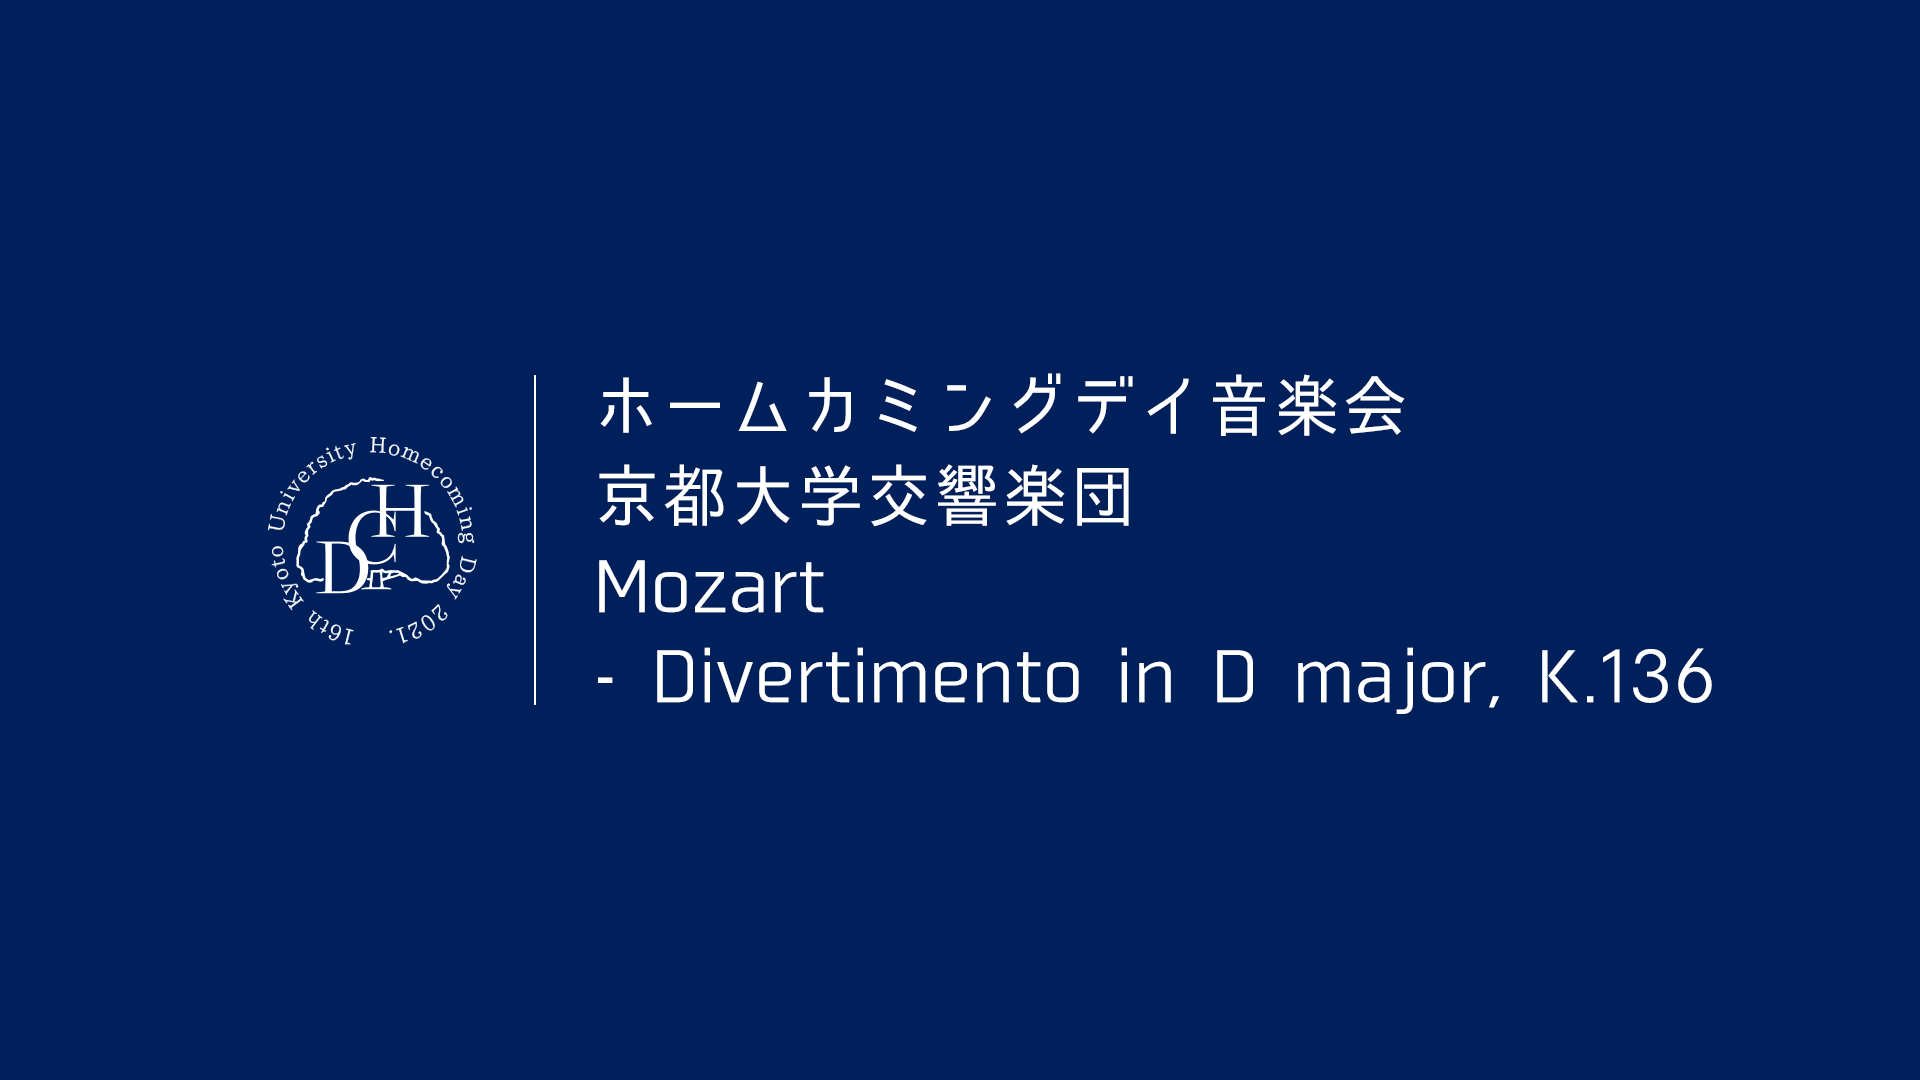 Mozart - Divertimento in D major, K.136